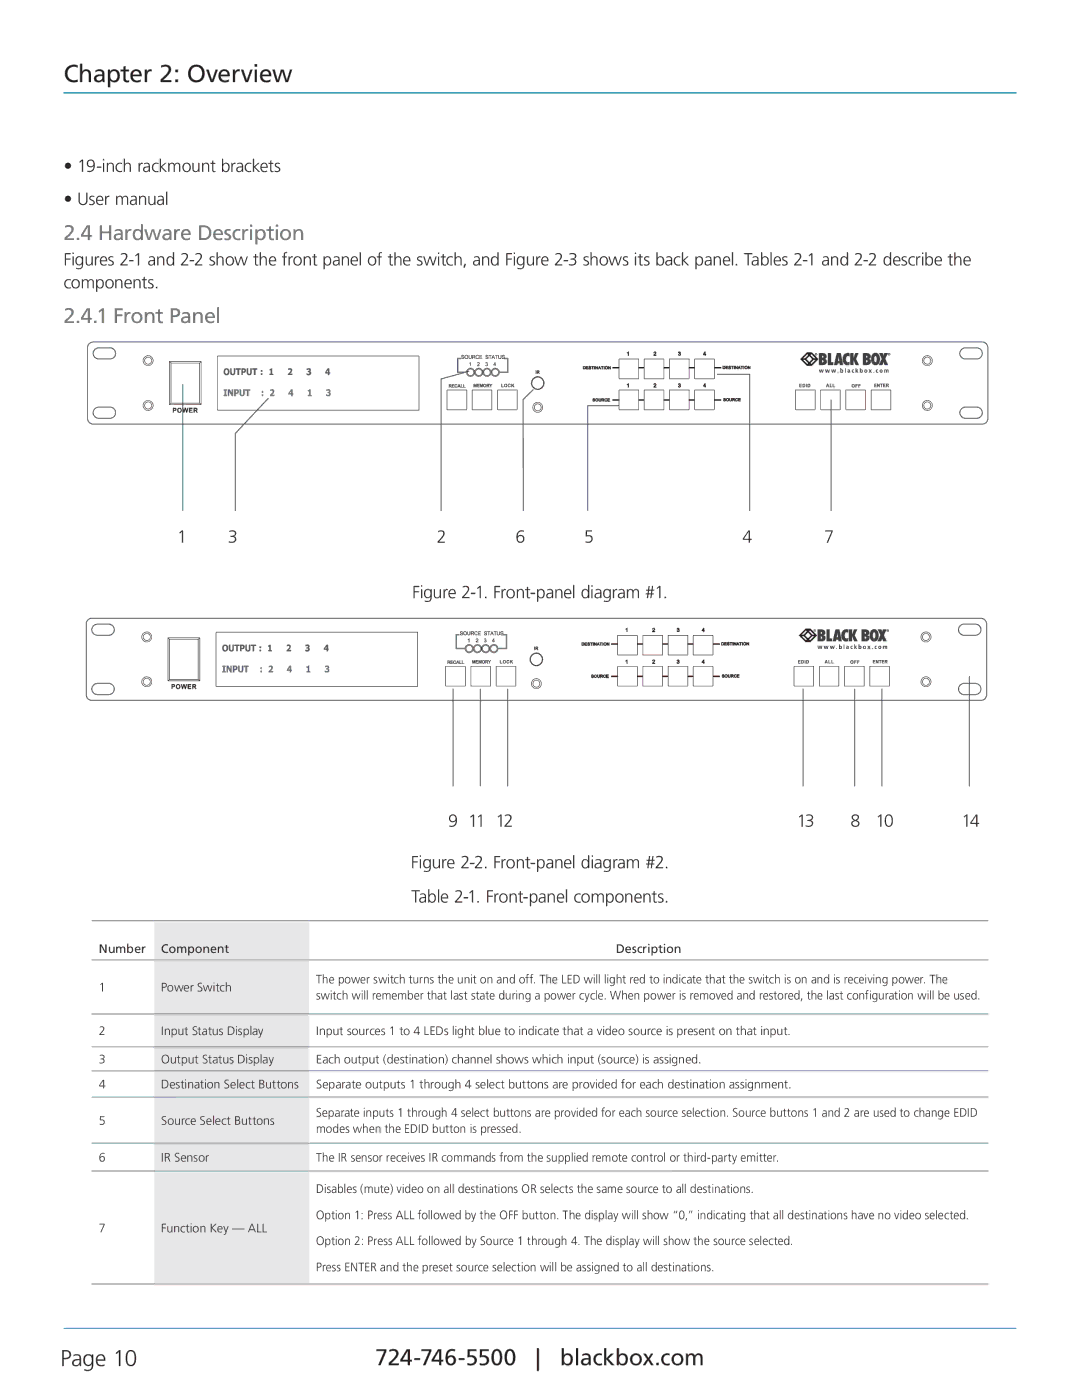 Black Box VSW-HDMI4X4-B, 4 x 4 HDMI Matrix Switch manual Hardware Description, Front Panel, Inch rackmount brackets 